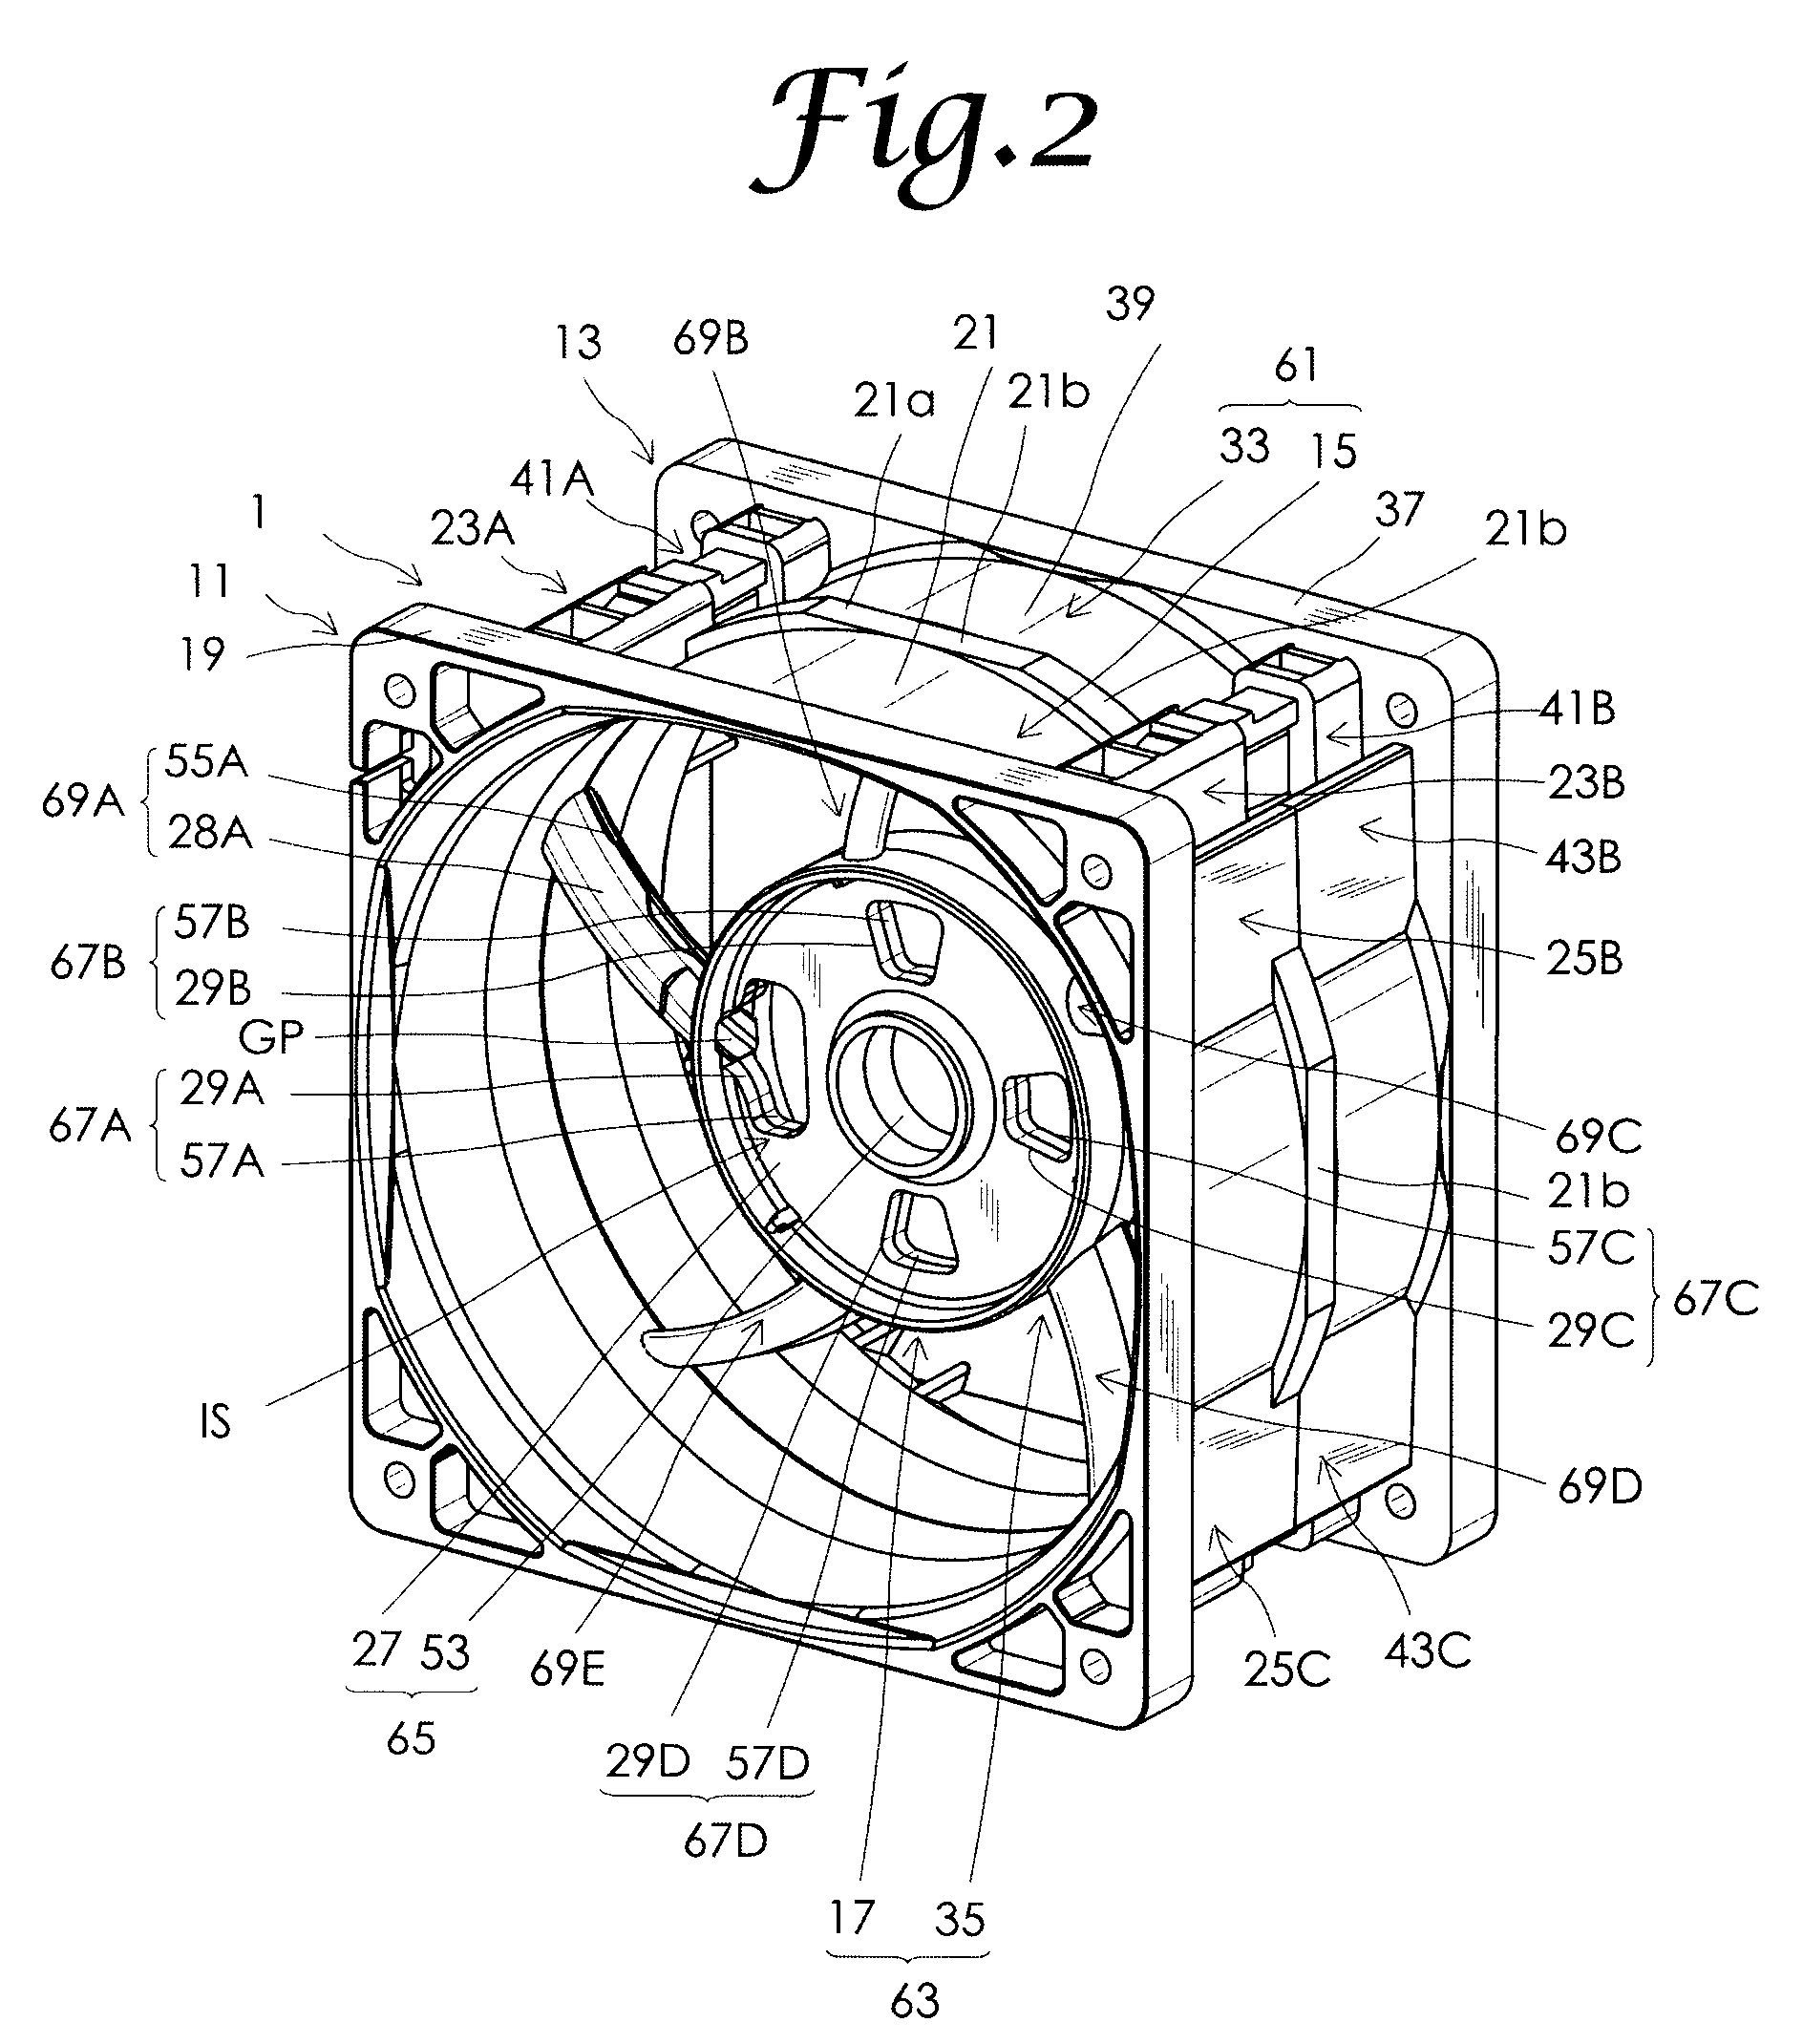 Counter-rotating axial-flow fan